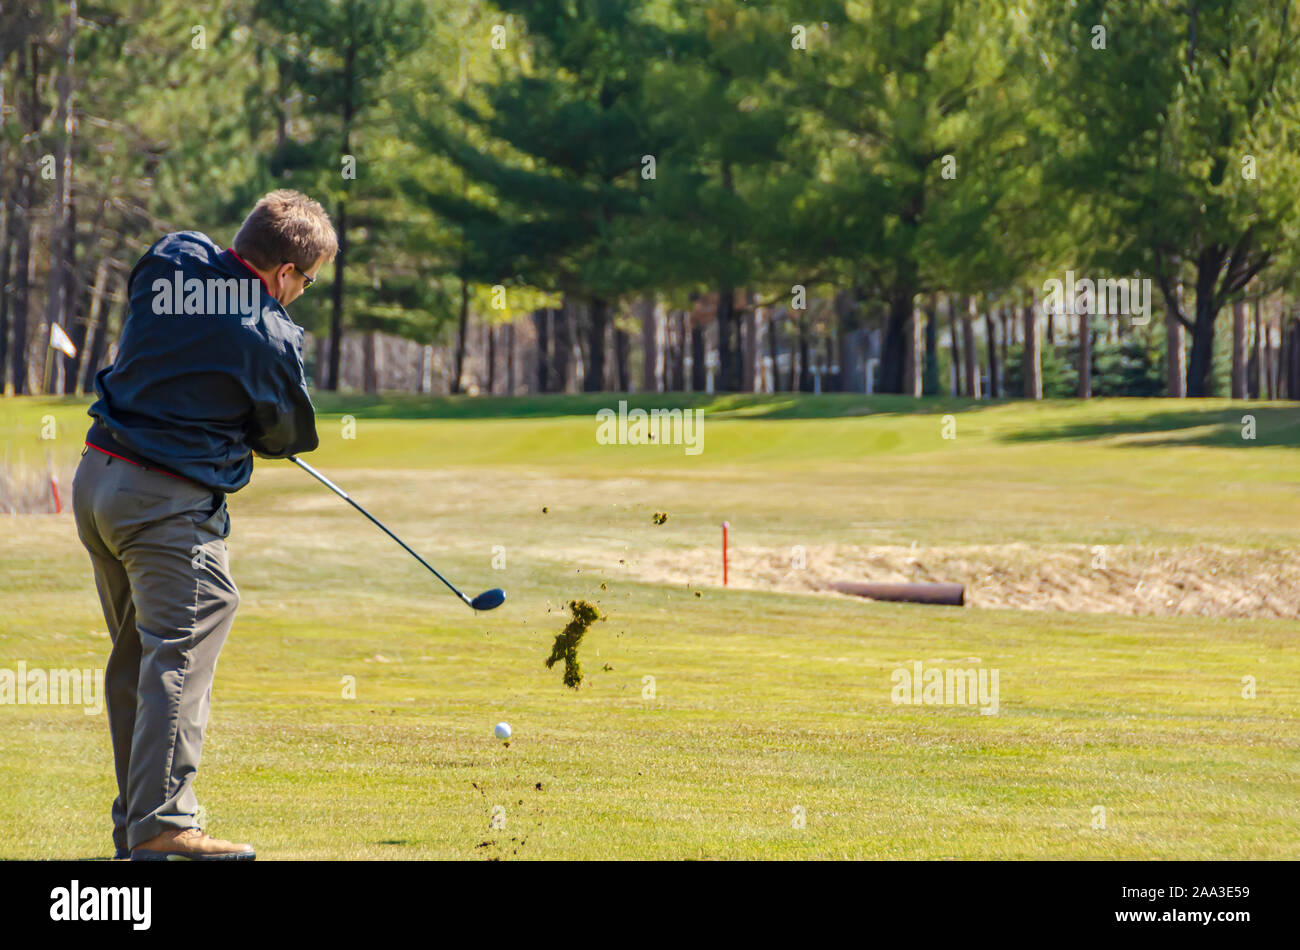 A golfer hitting a golf ball on the fairway with a hybrid golf club. Stock Photo